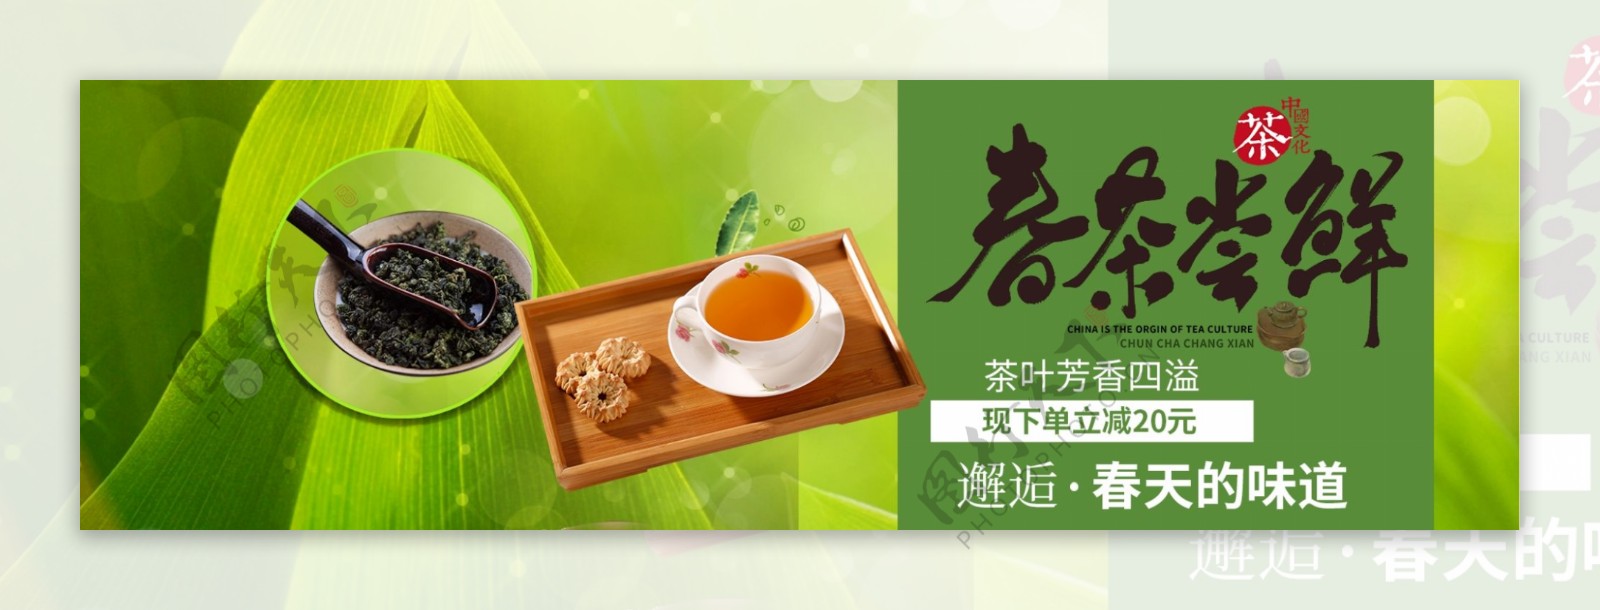 绿色清新春茶节淘宝banner